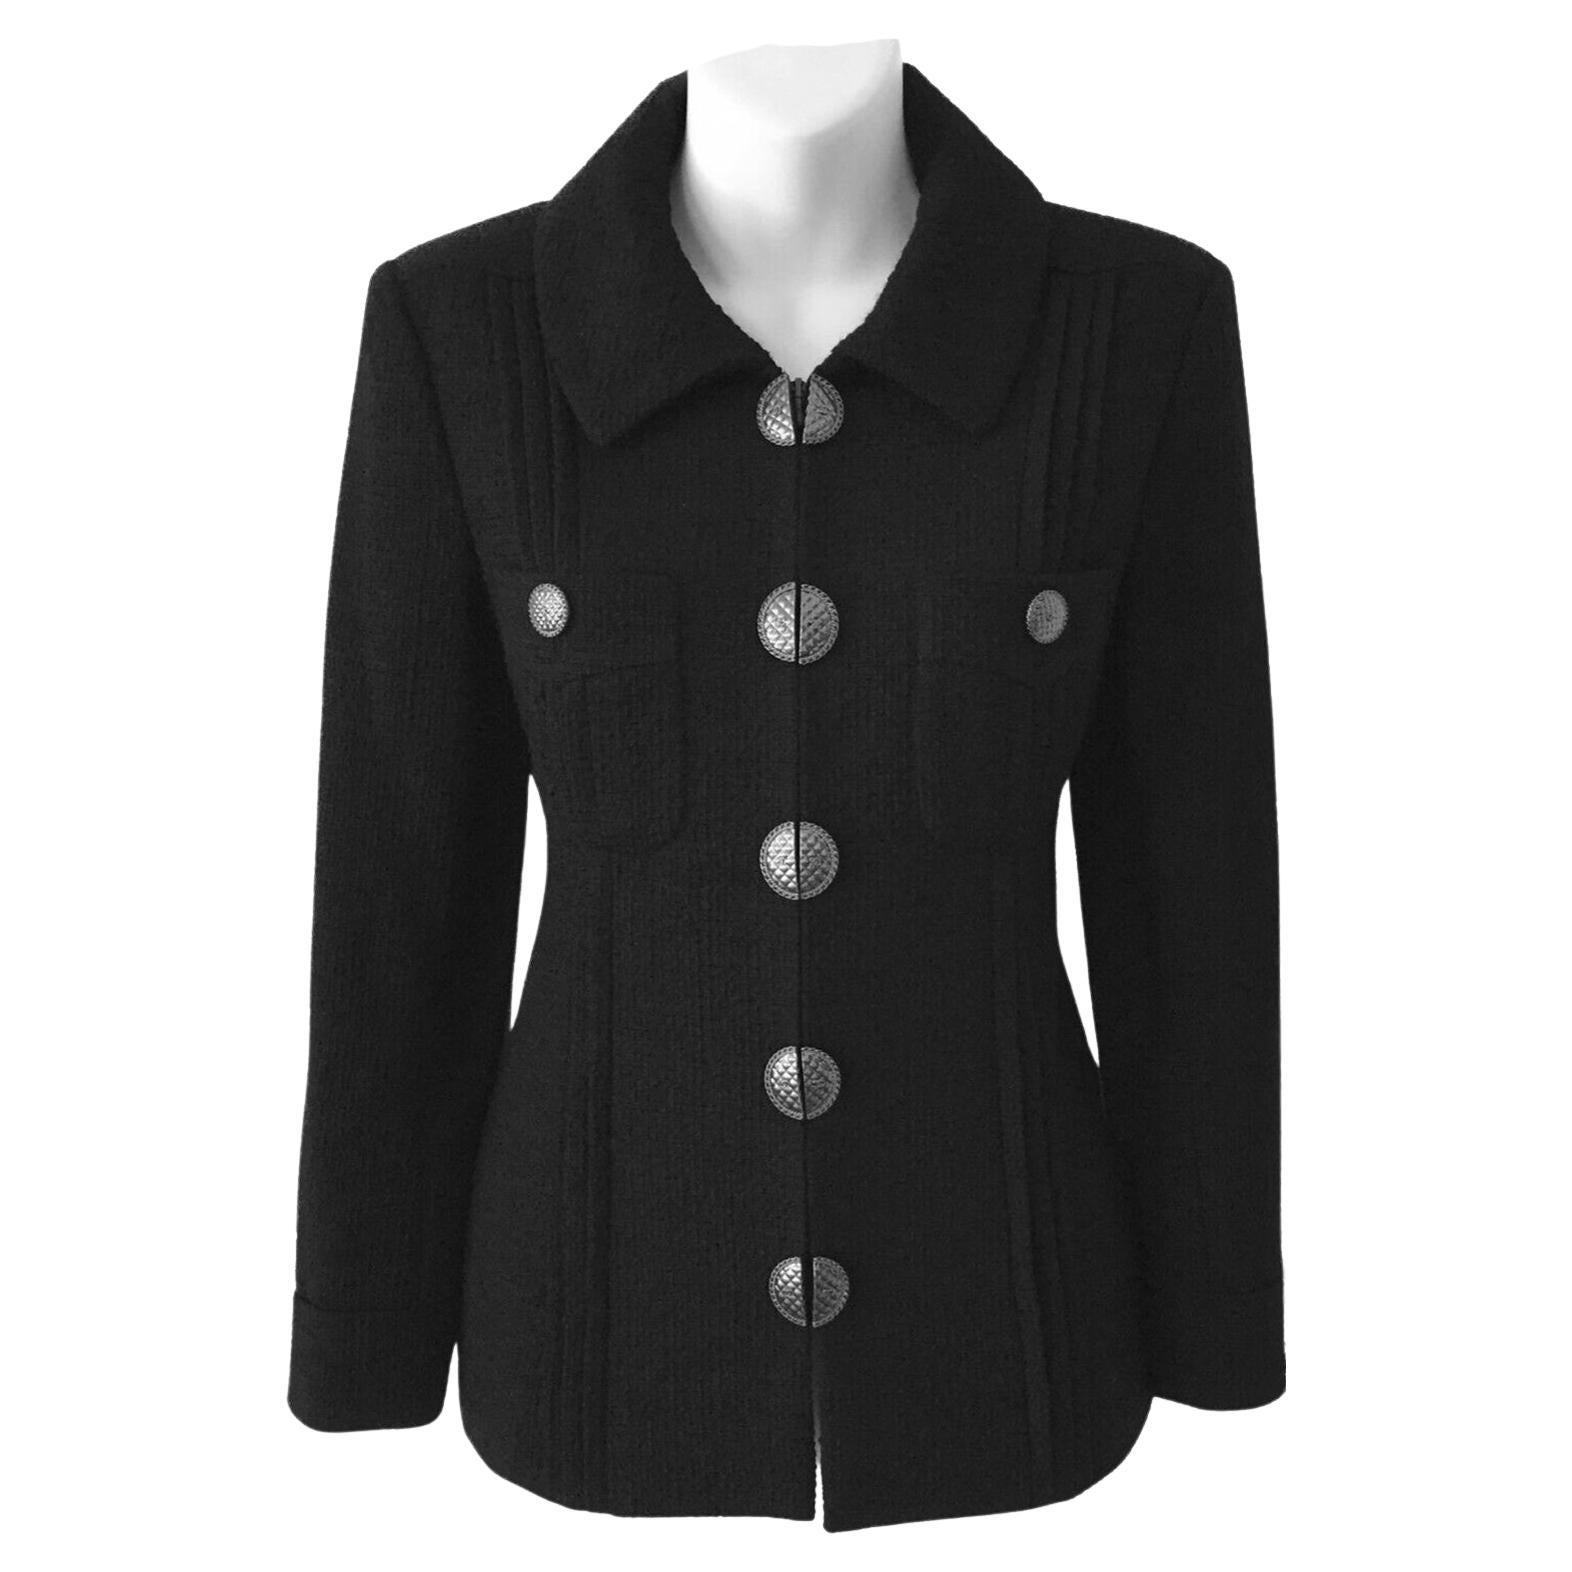 Chanel New Cuba Collection Black Tweed Jacket